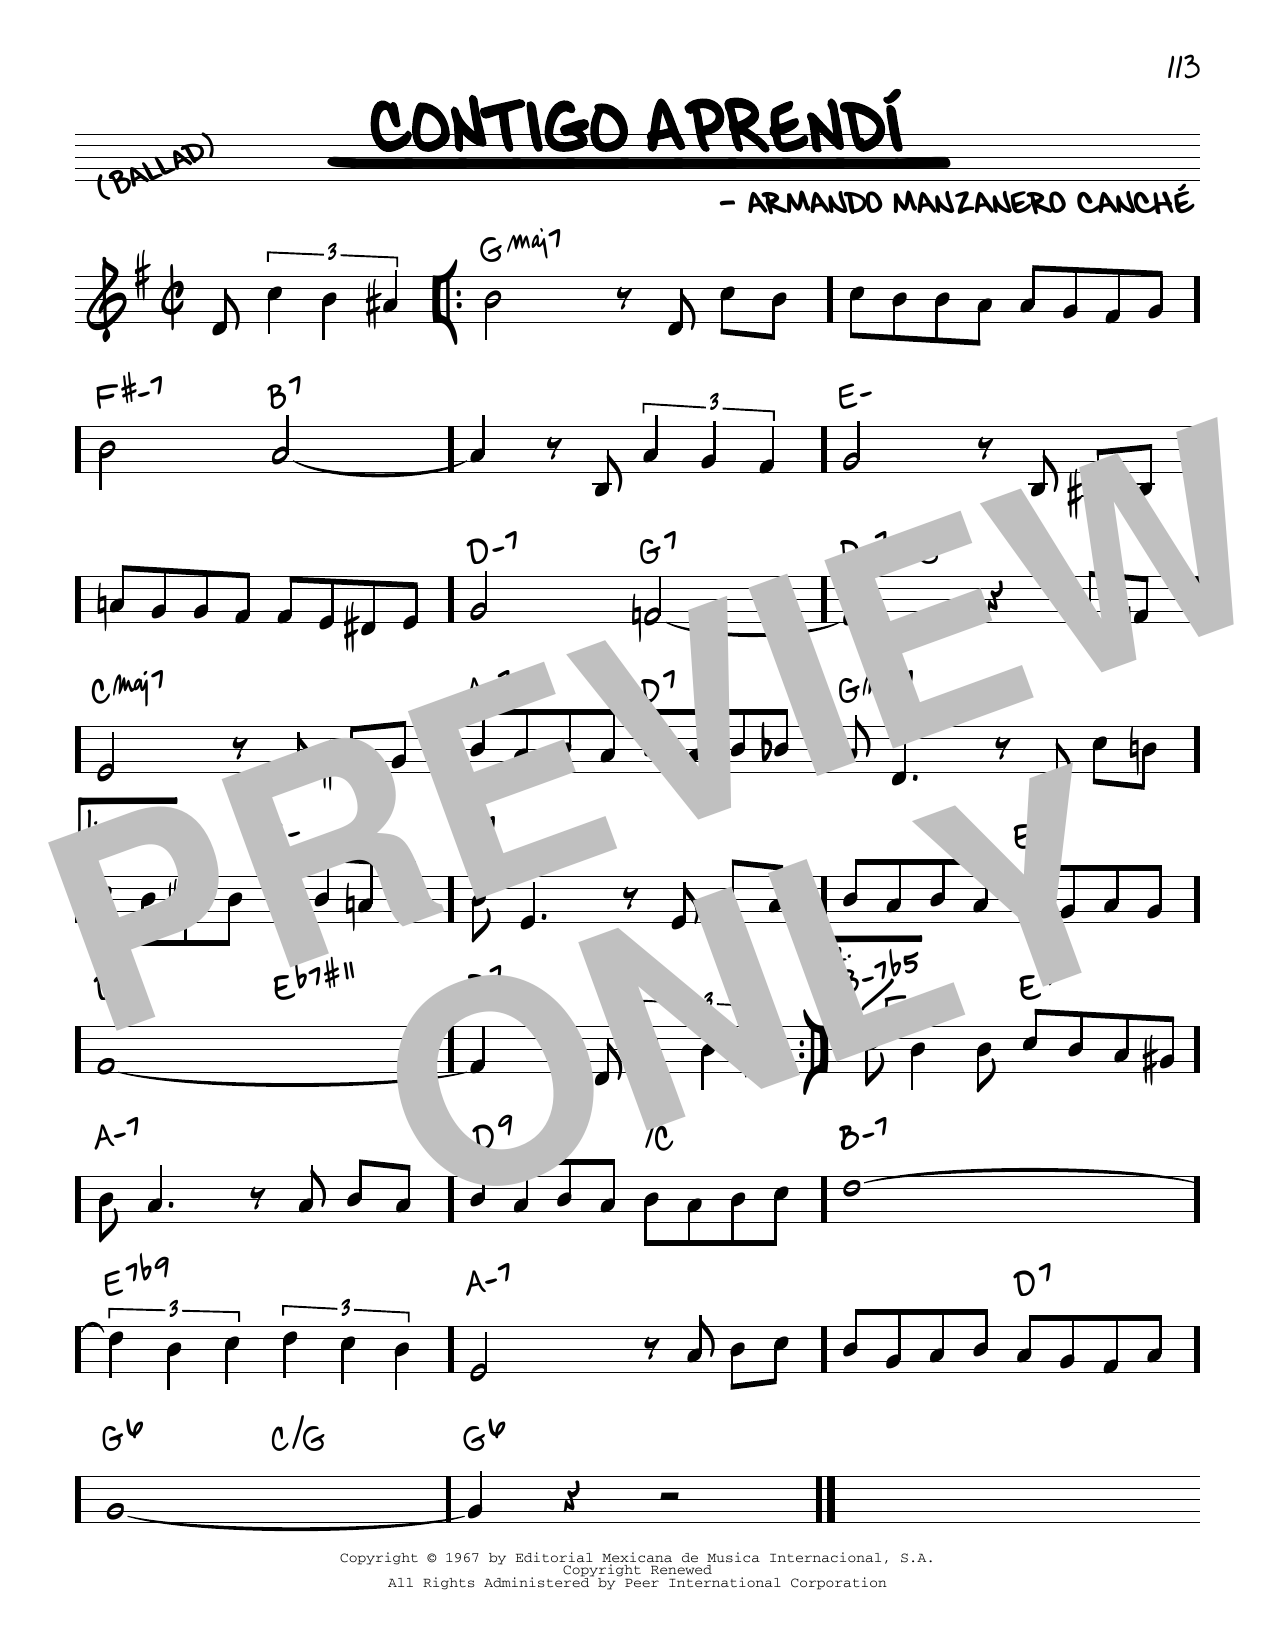 Armando Manzanero Canche Contigo Aprendi Sheet Music Notes & Chords for Piano, Vocal & Guitar Chords (Right-Hand Melody) - Download or Print PDF